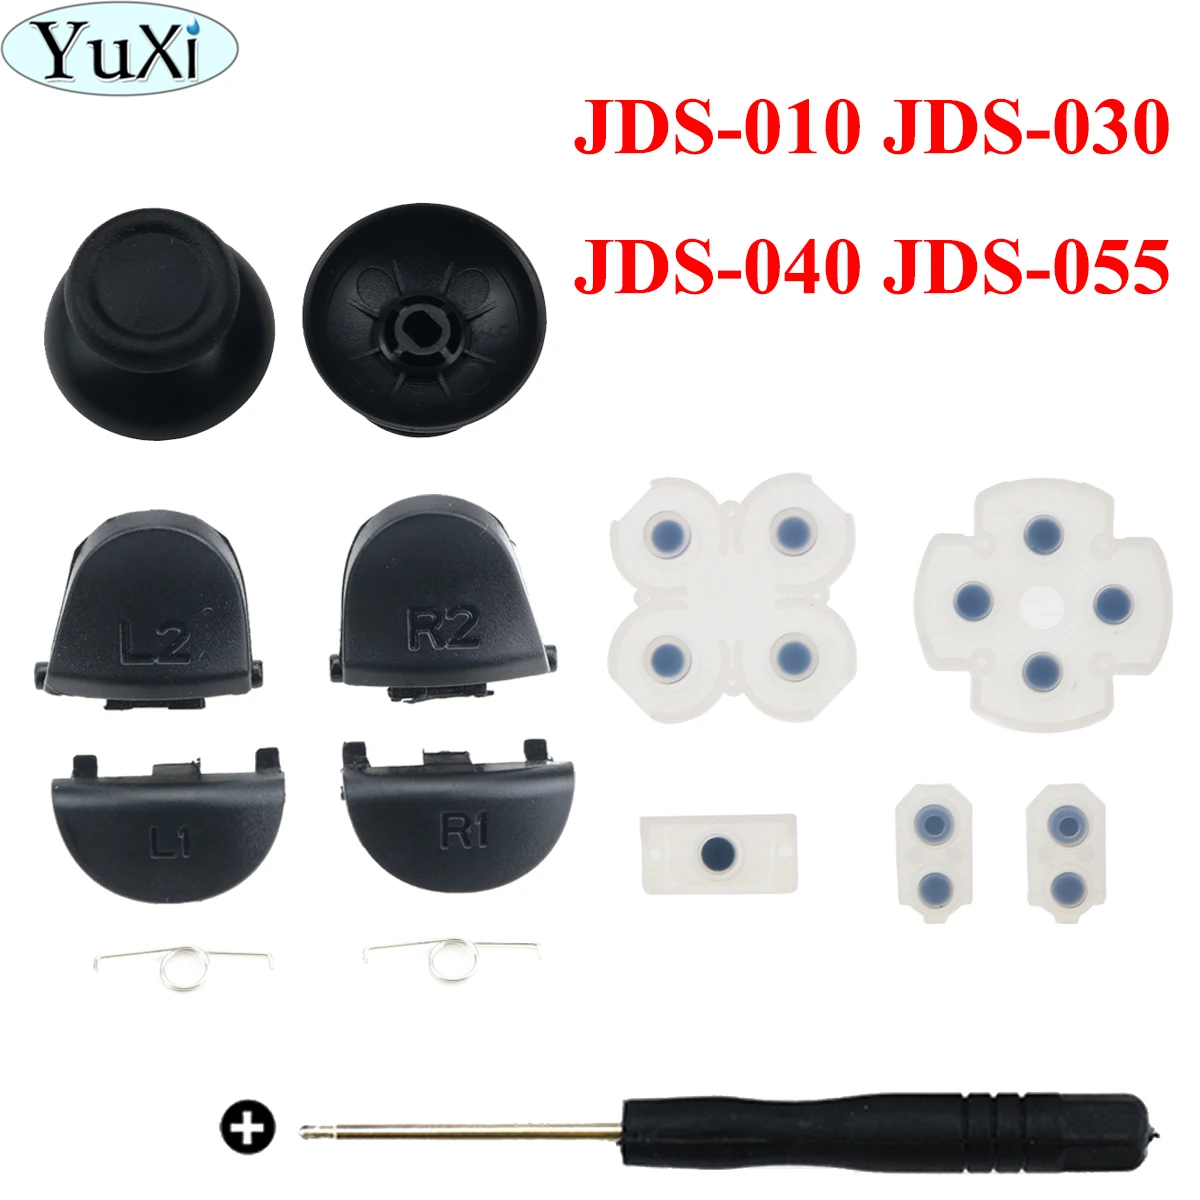 

Пусковые кнопки YuXi для JDM JDS 055 050 040 030 011 001 R2 L2 L1 R1, набор для Mod, для контроллера PS4 Pro Slim, аналоговые колпачки для стиков